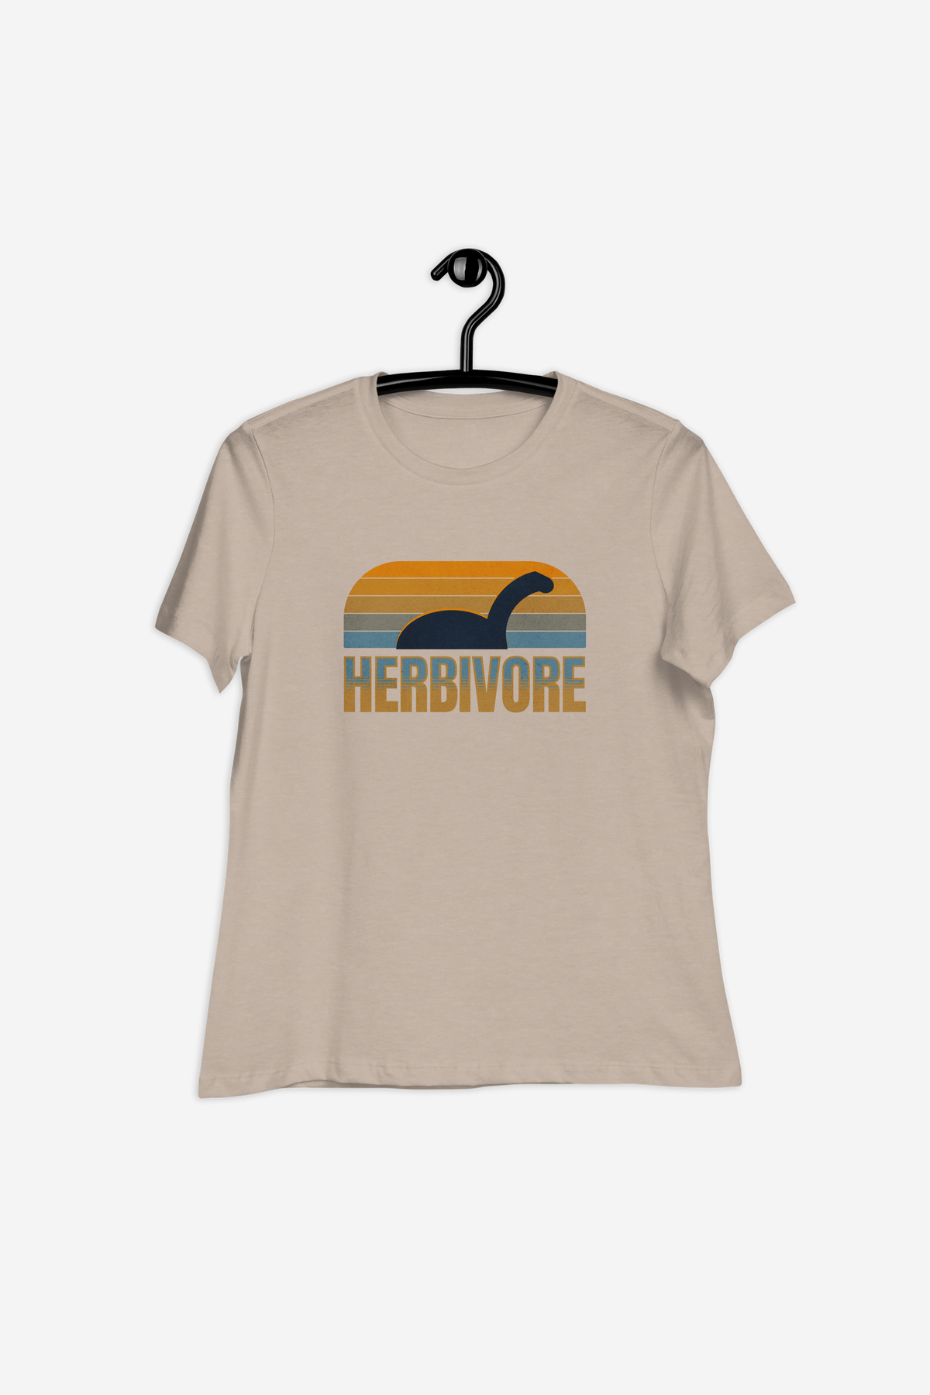 Herbivore Dino Women's Relaxed T-Shirt